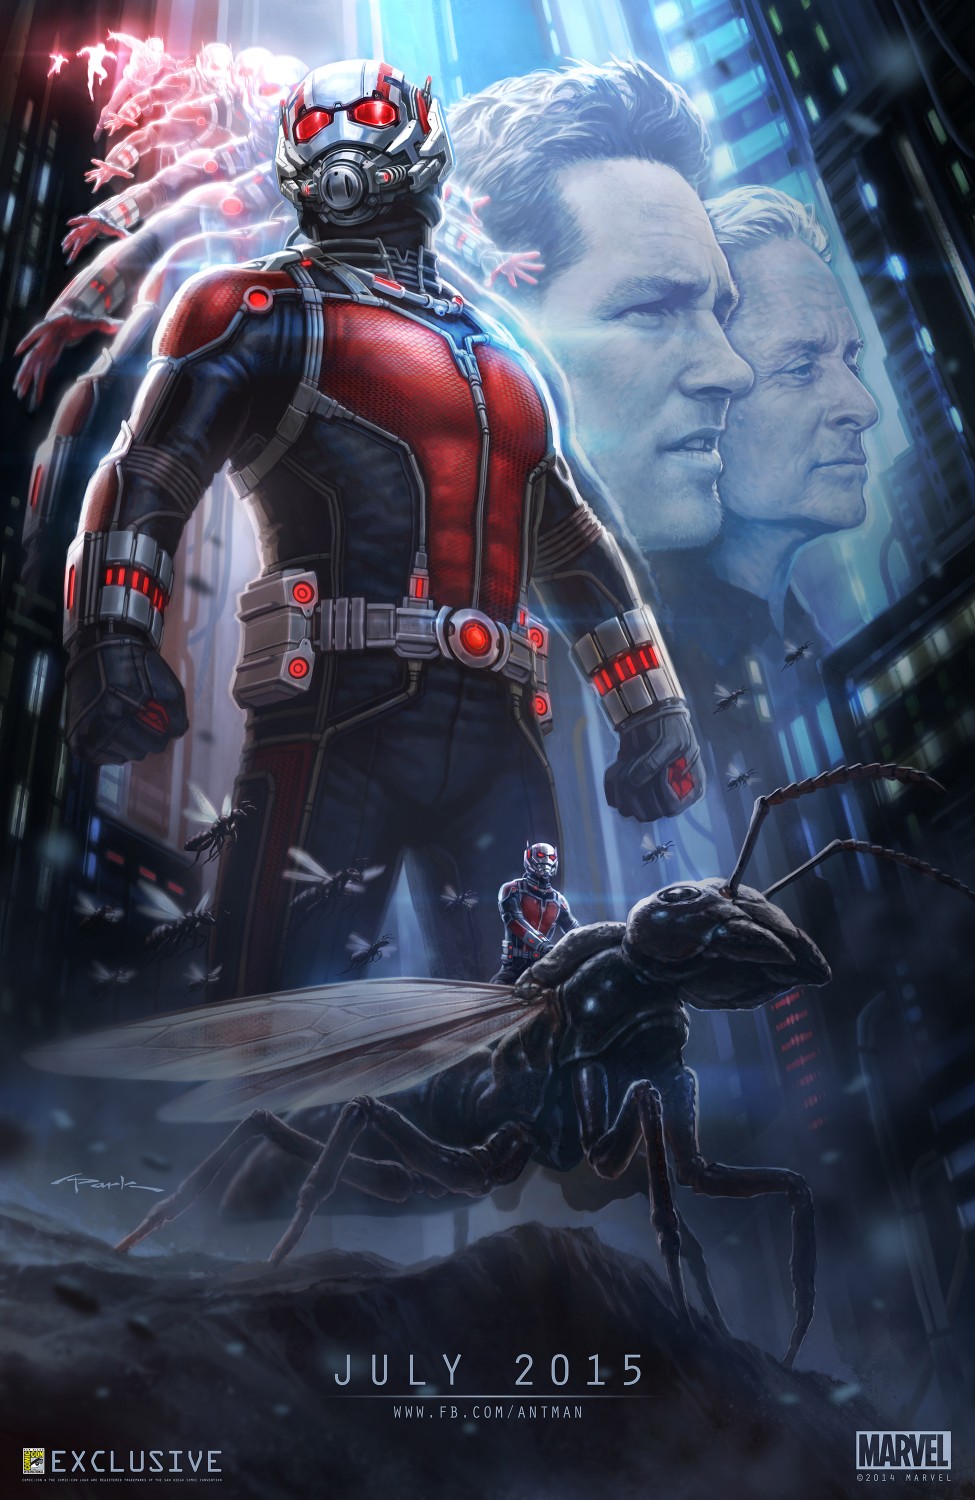 Ant-Man (2015) - IMDb